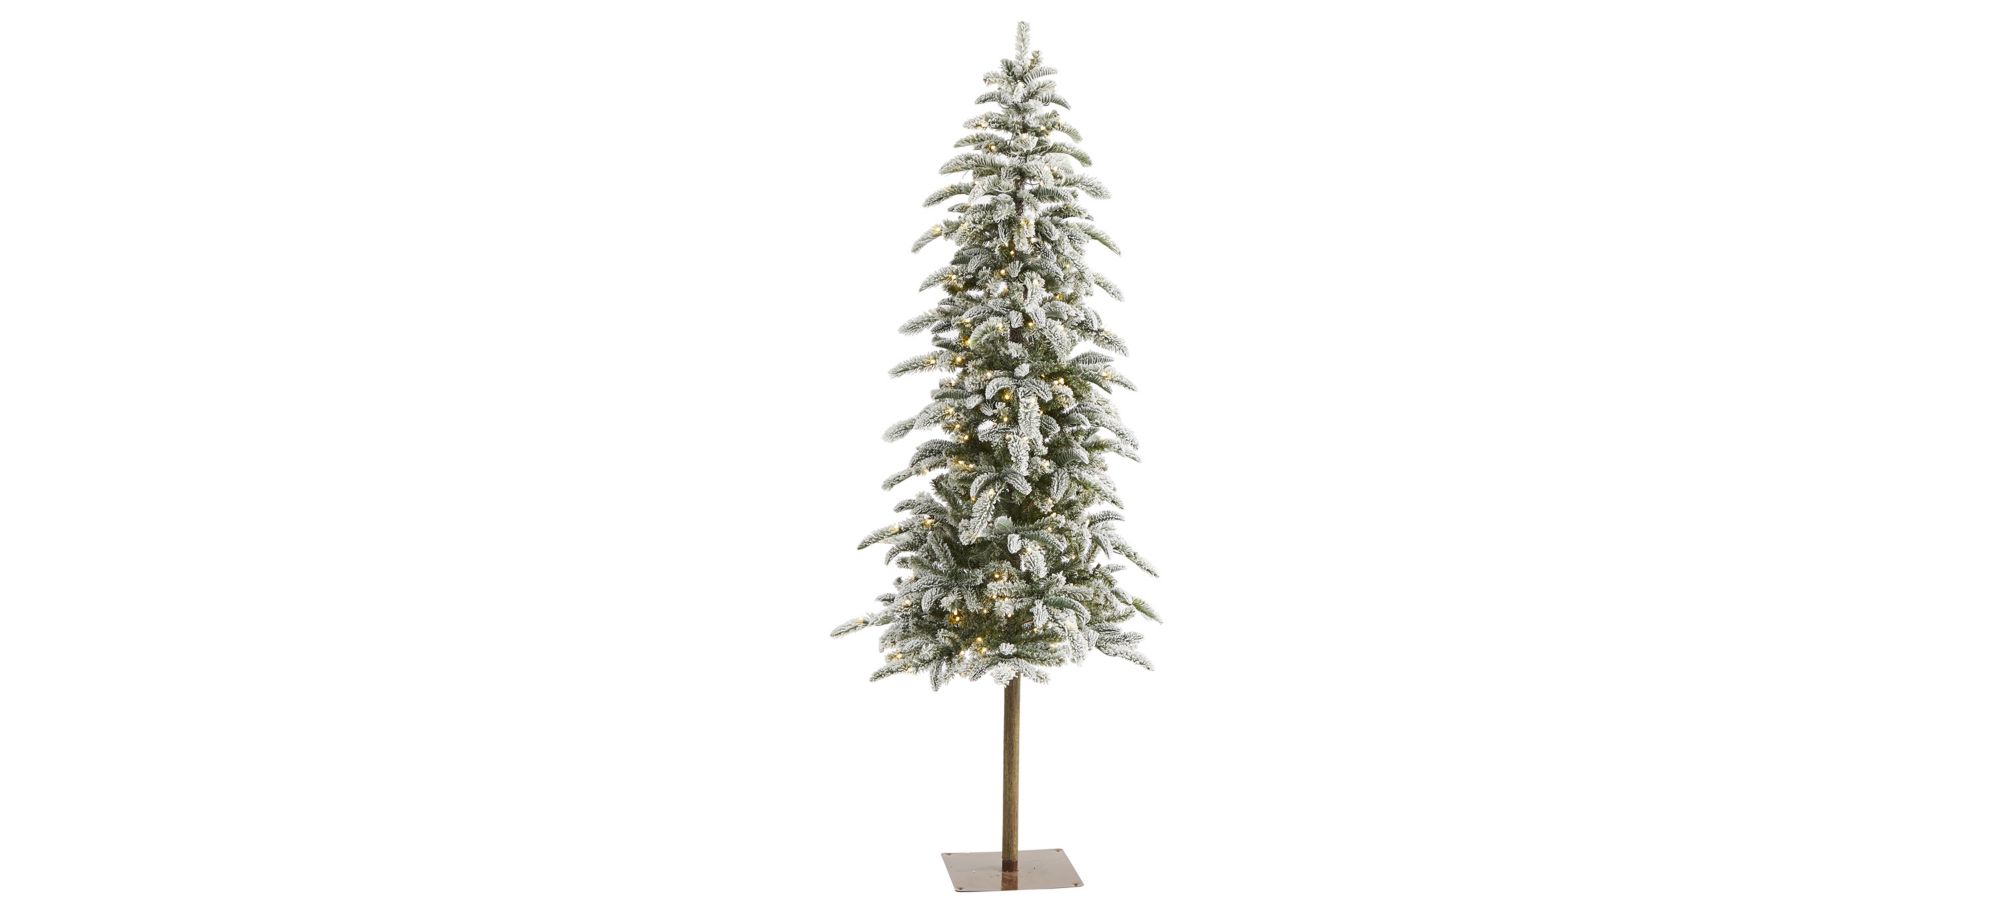 6.5ft. Pre-Lit Flocked Washington Alpine Artificial Christmas Tree in Green by Bellanest